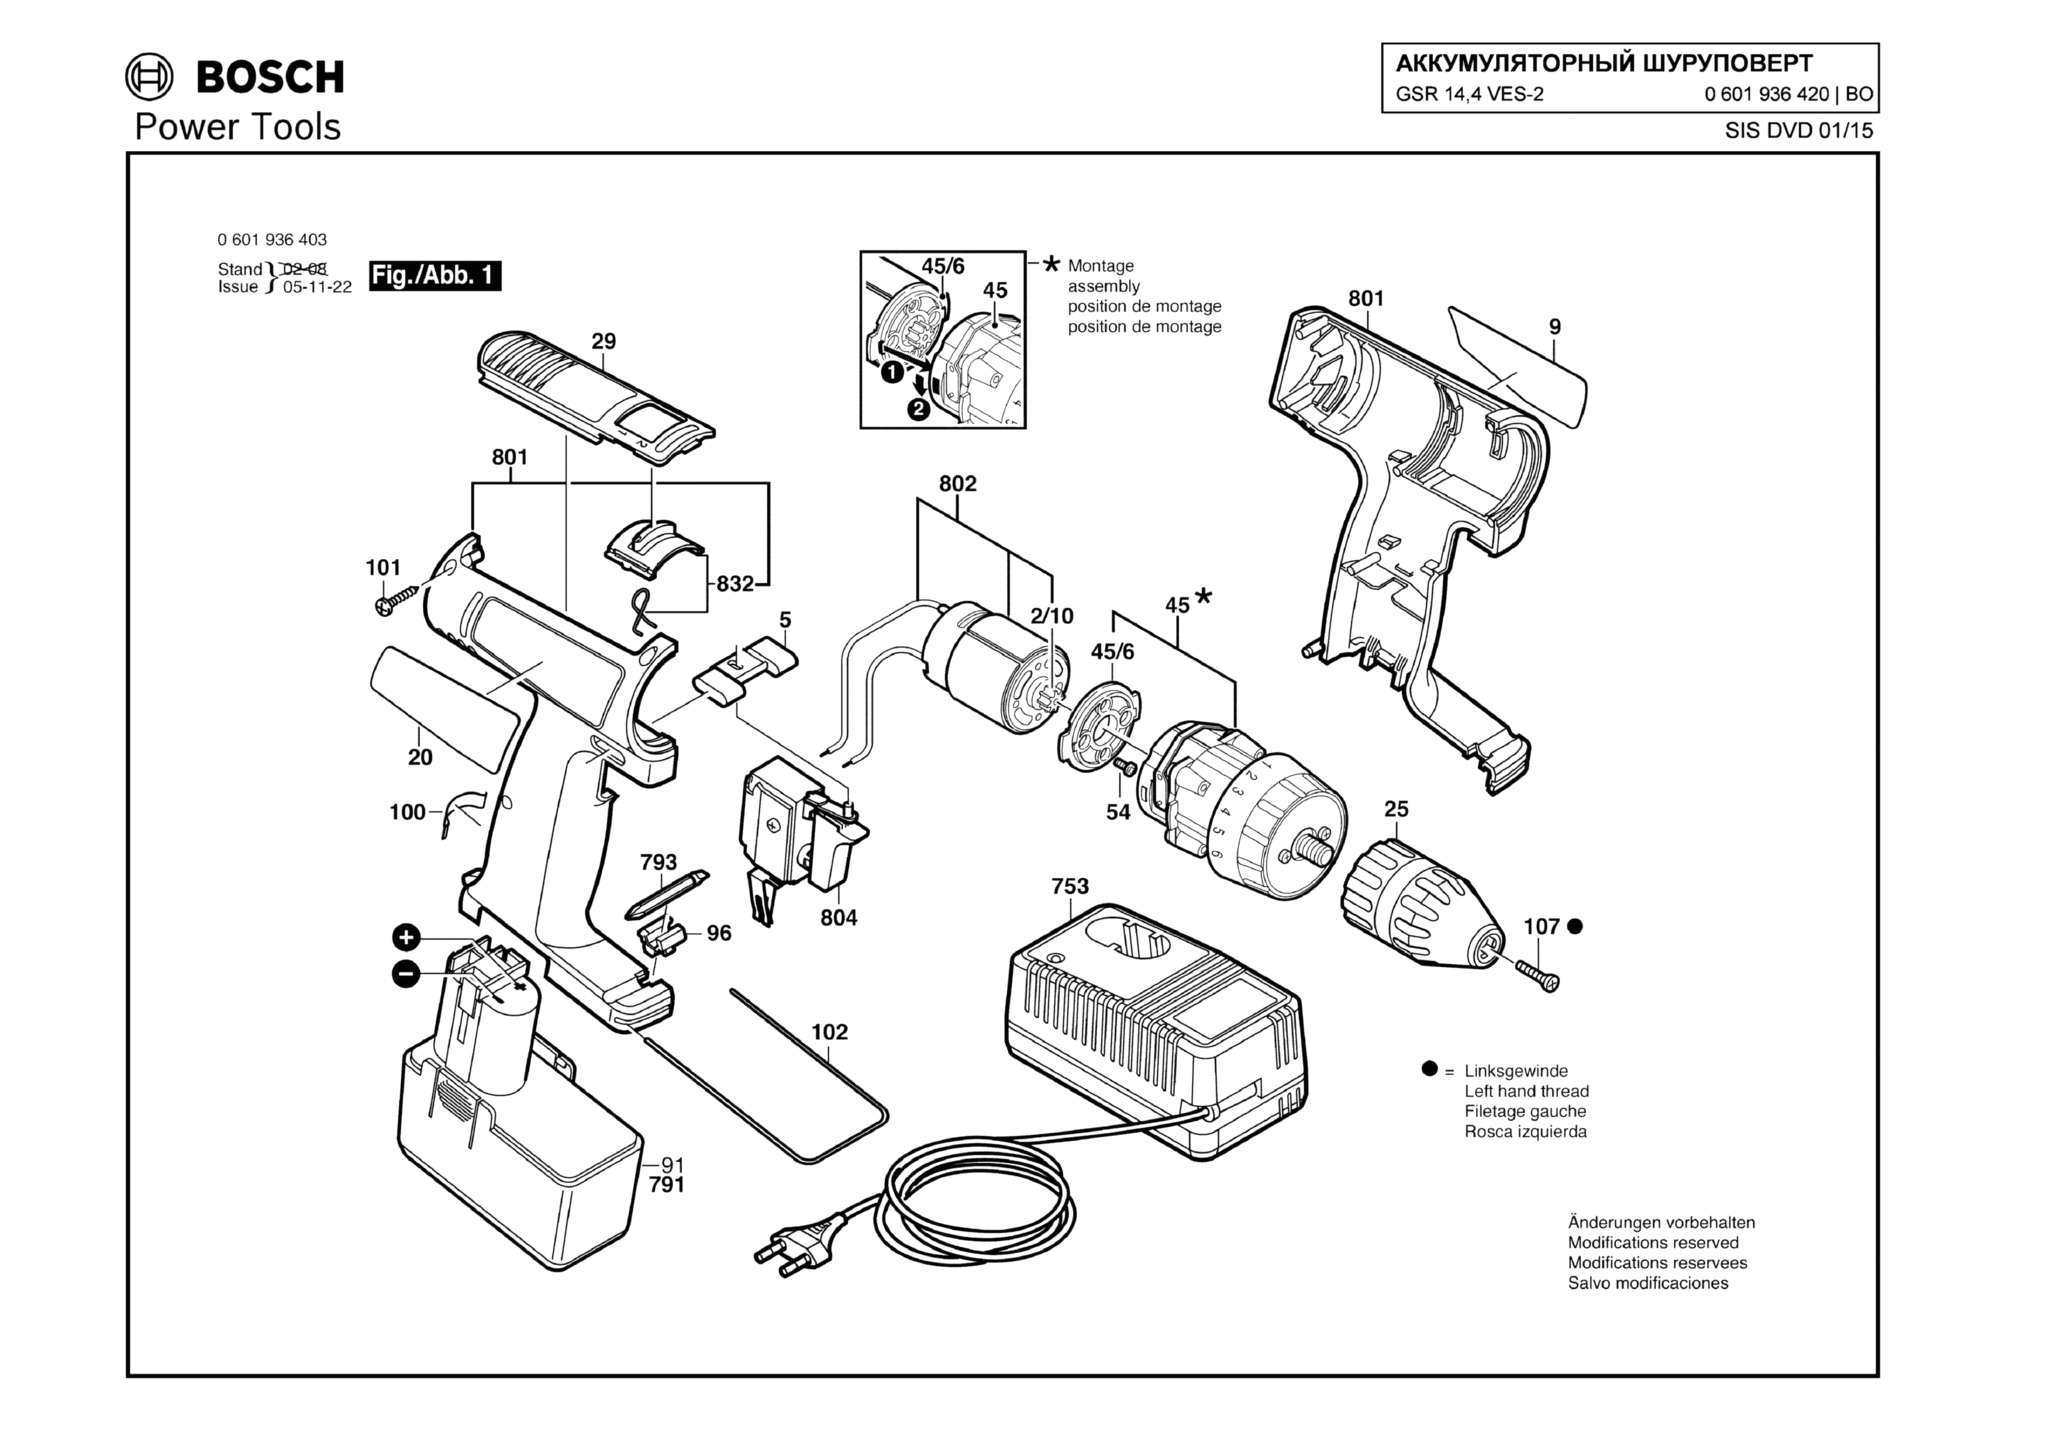 Запчасти, схема и деталировка Bosch GSR 14,4 VES-2 (ТИП 0601936420)